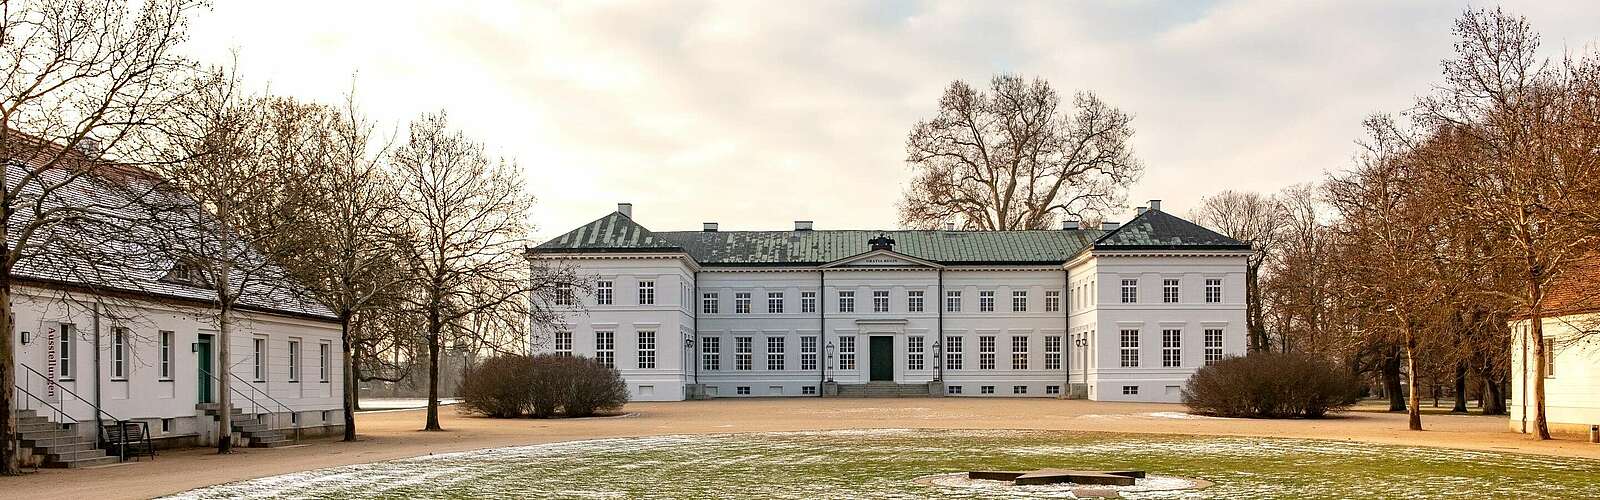 Schloss Neuhardenberg,
        
    

        Foto: TMB-Fotoarchiv/Steffen Lehmann